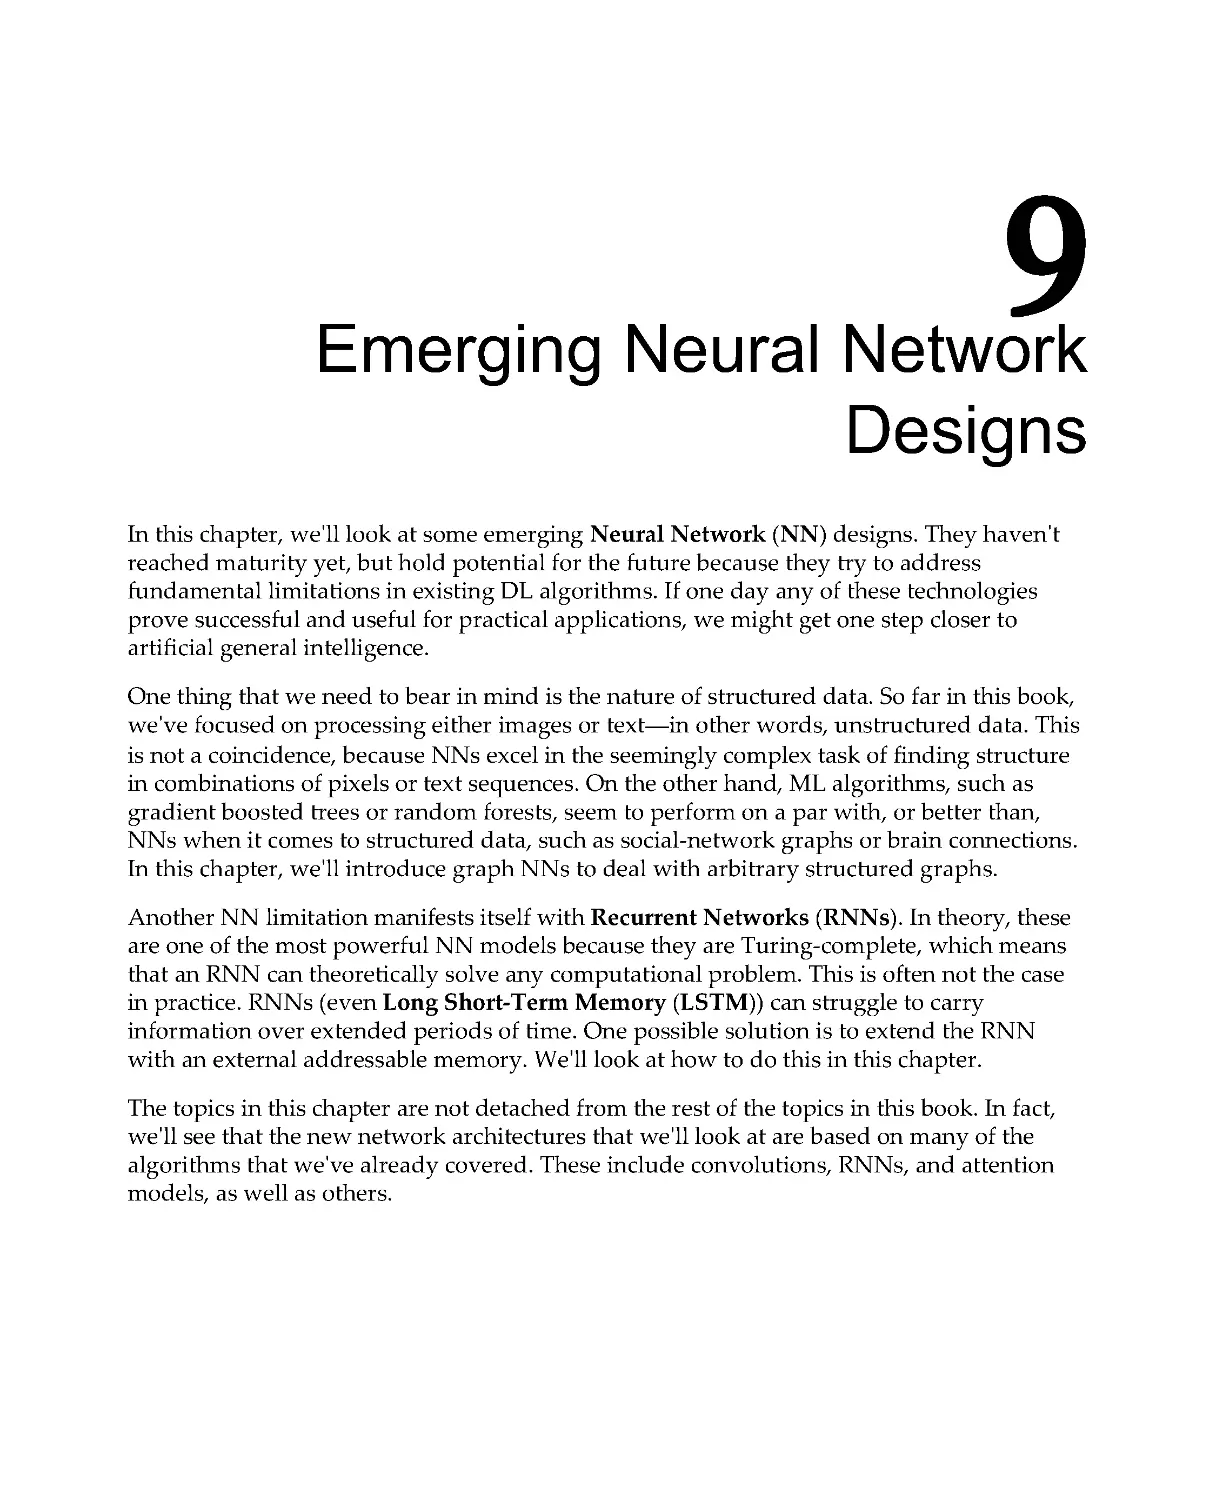 Chapter 9: Emerging Neural Network Designs